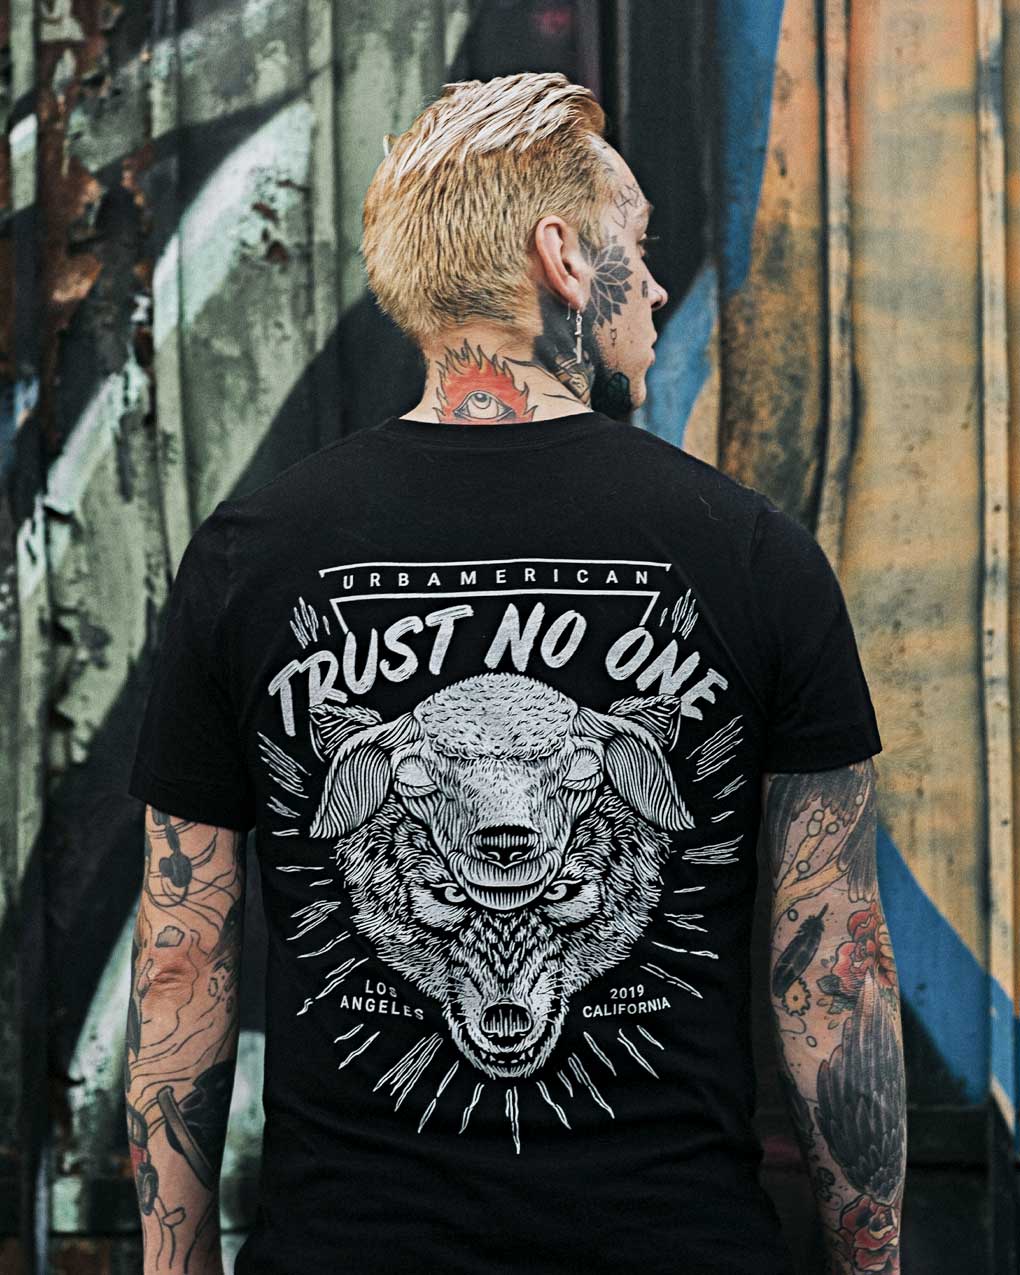 Urbamerican | Trust No One T-Shirt